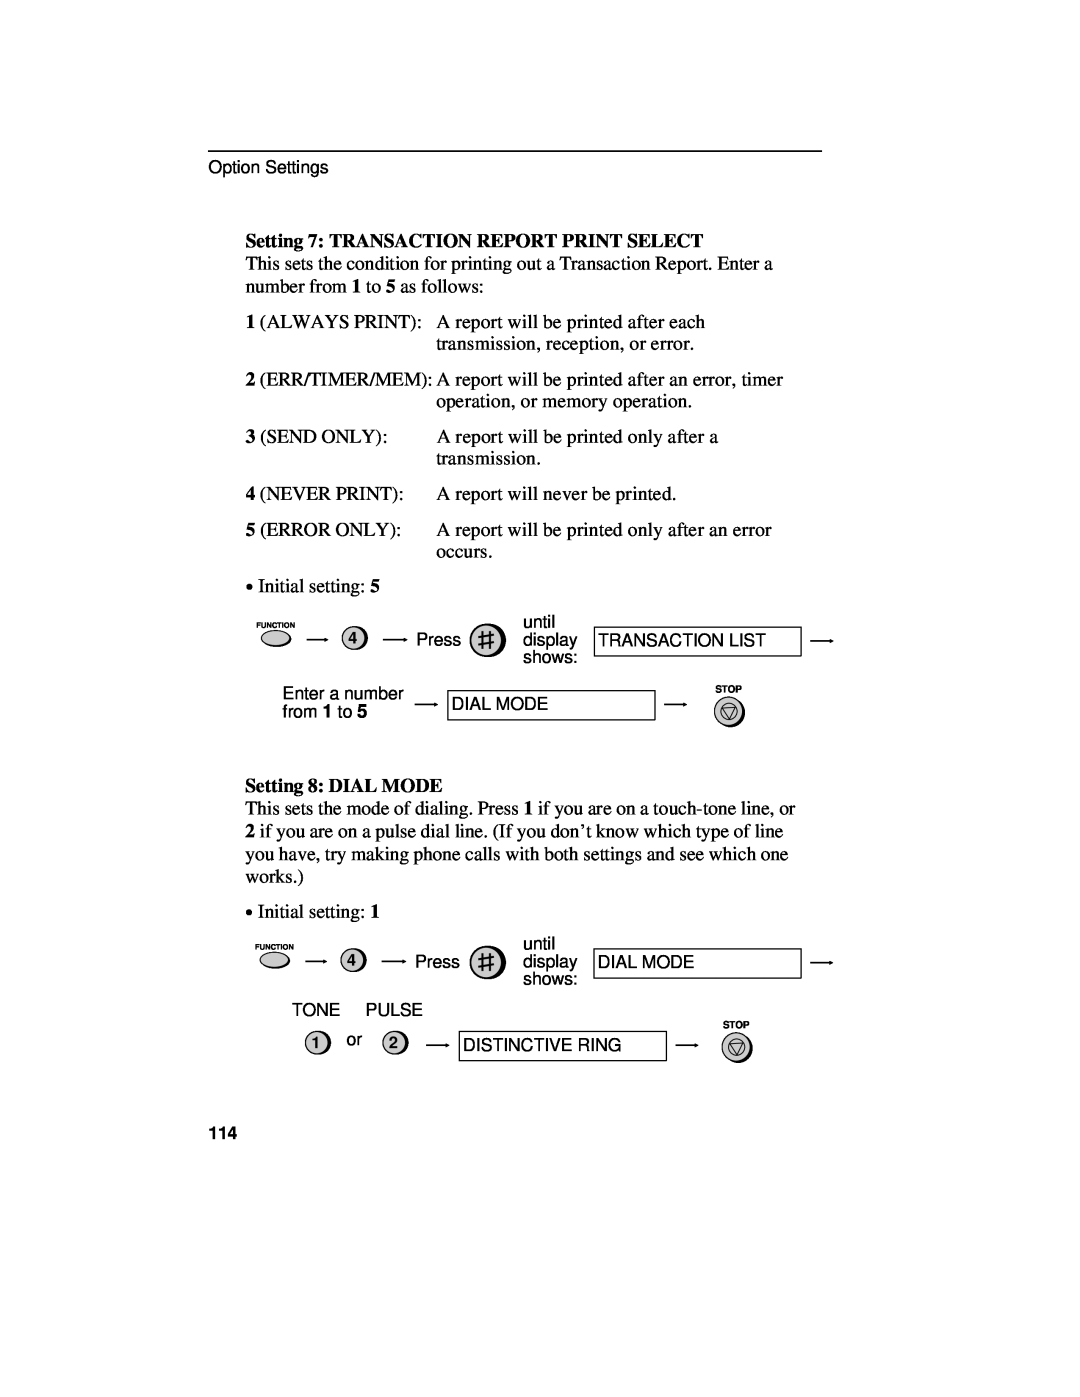 Sharp UX-460 operation manual Setting 7 TRANSACTION REPORT PRINT SELECT, Setting 8 DIAL MODE 